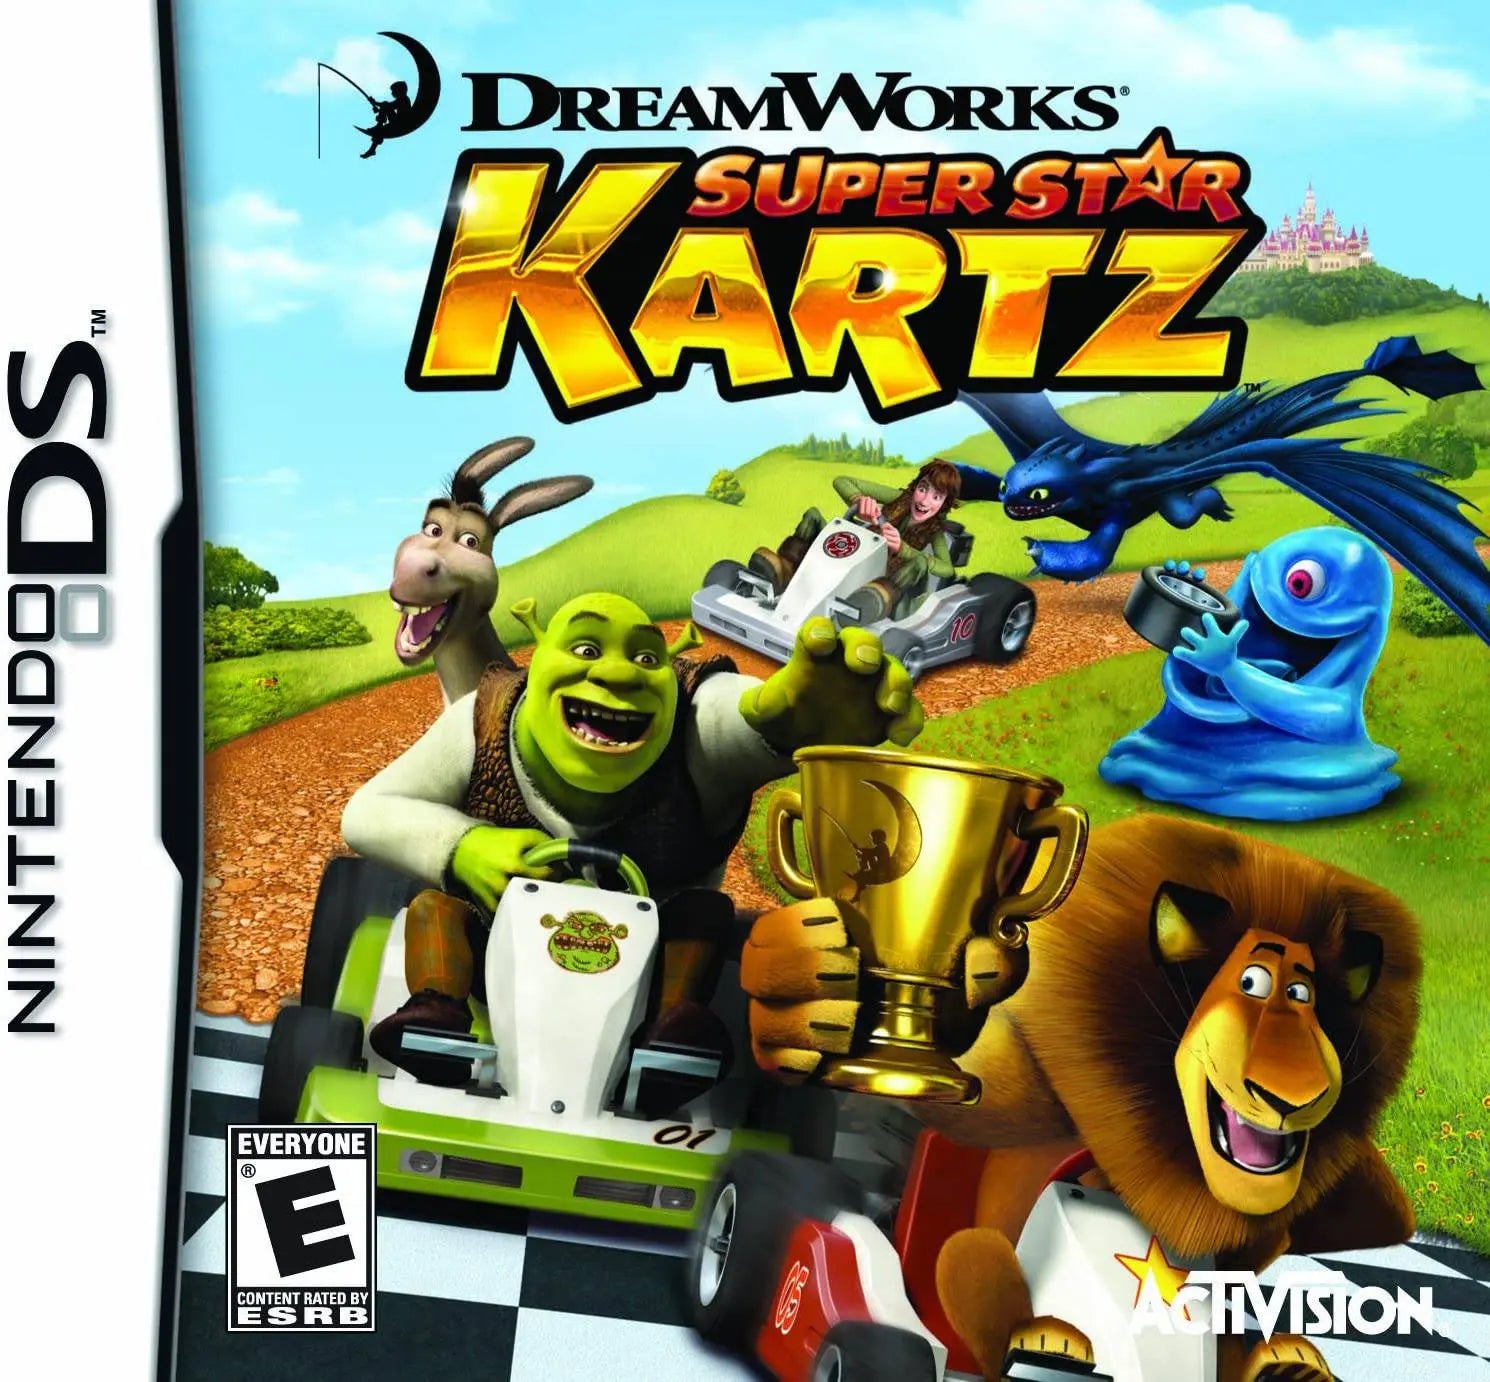 Dreamworks Super Star Kartz DS - Used King Gaming